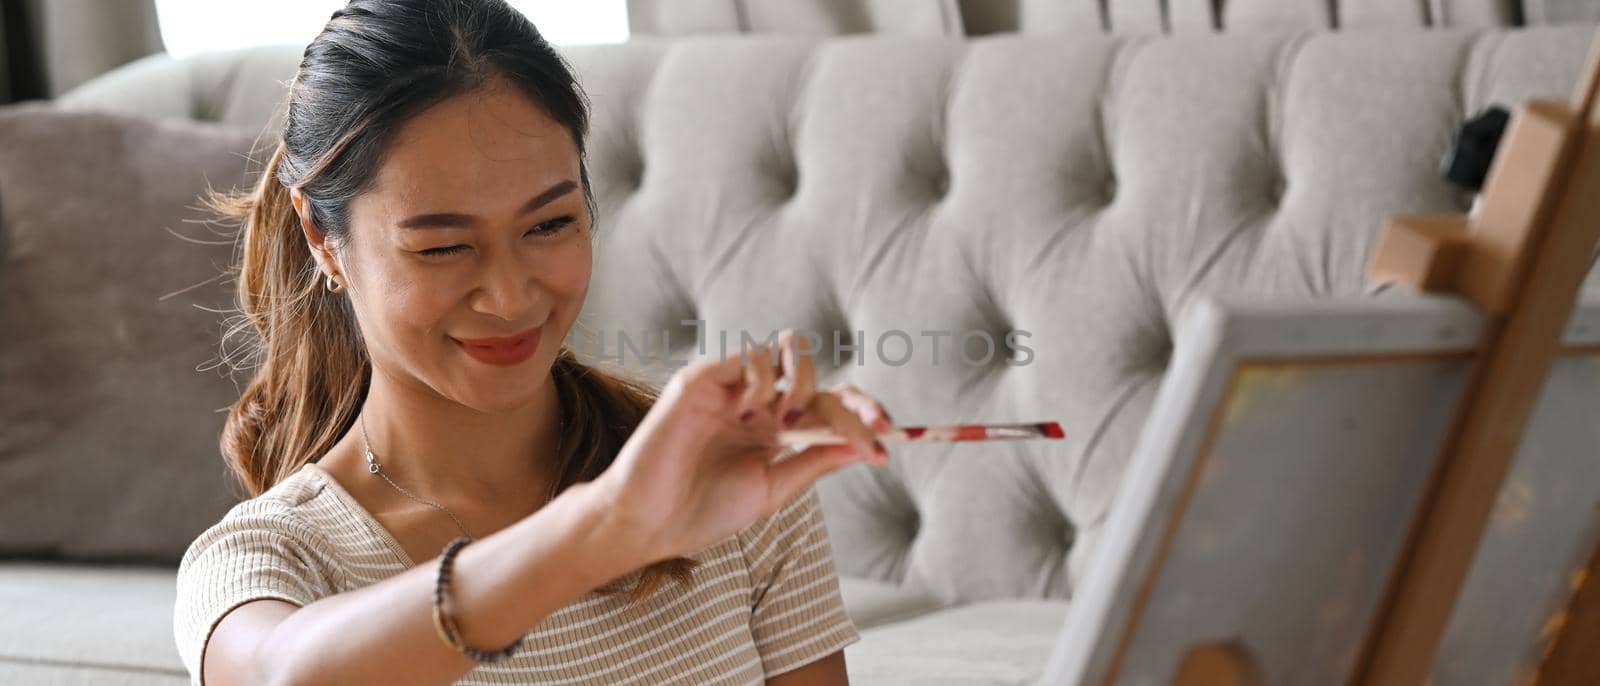 Attractive woman holding paintbrush enjoy creating artwork at home. by prathanchorruangsak